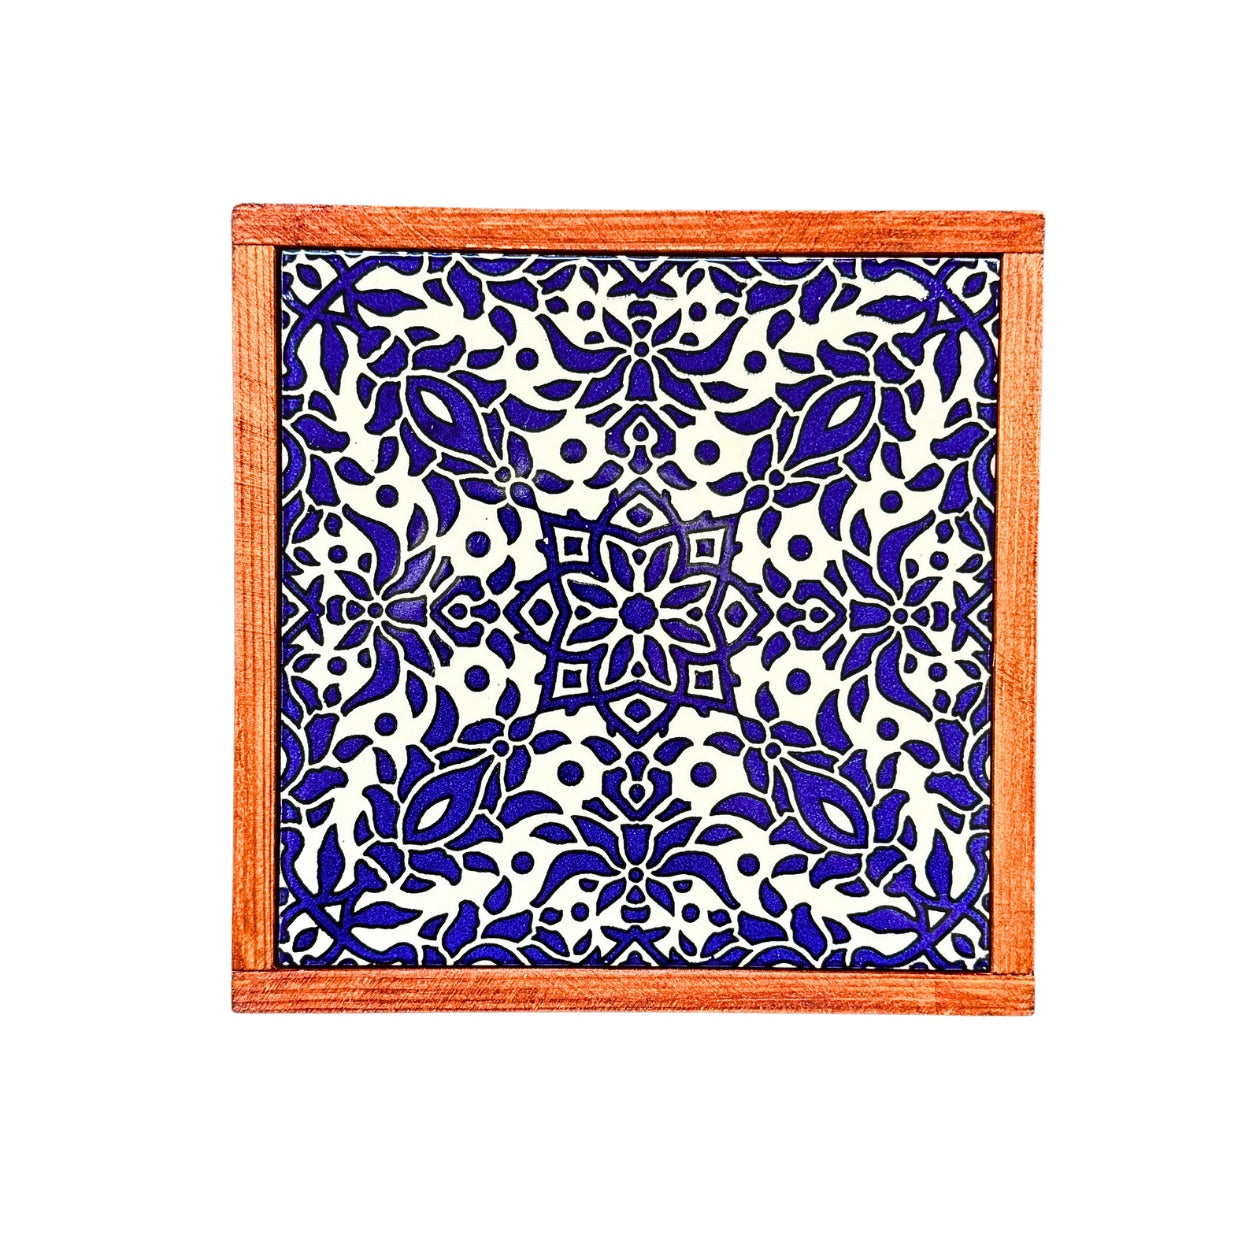 Wood & Ceramic Tile Box - Blue Floral